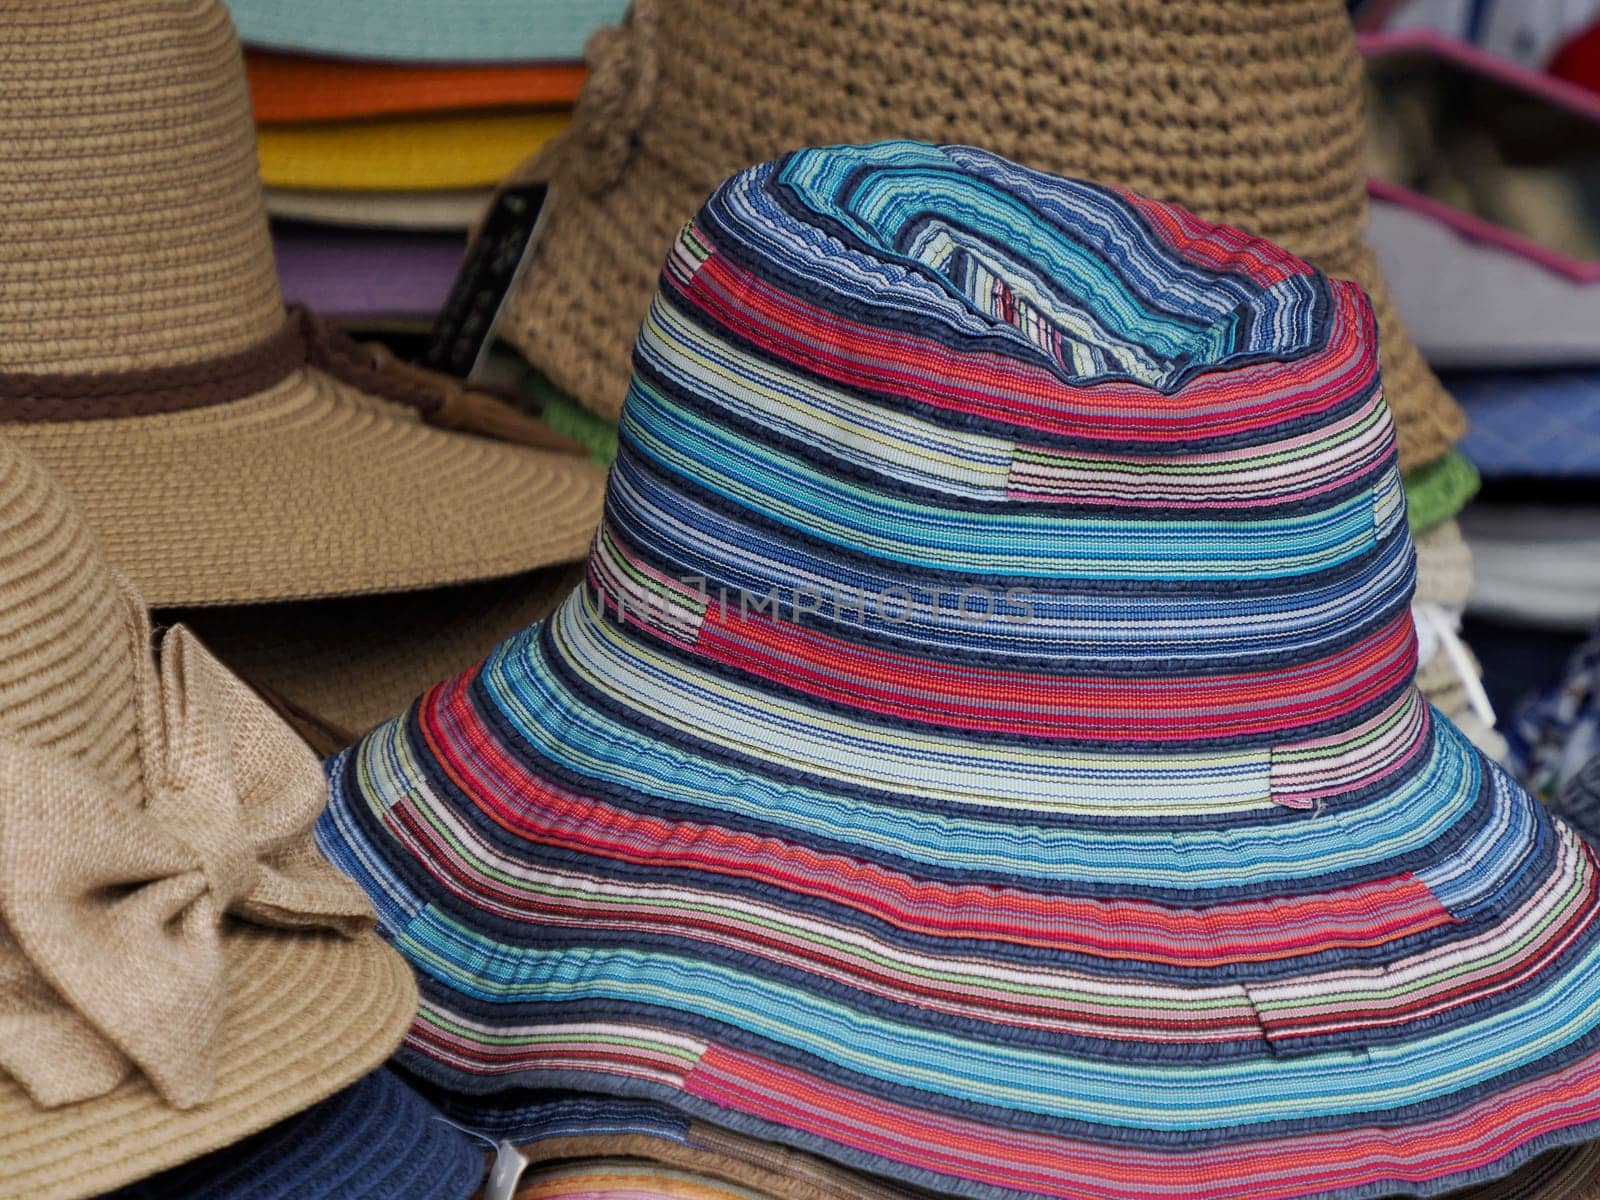 Many Panama hats in a store market by AndreaIzzotti